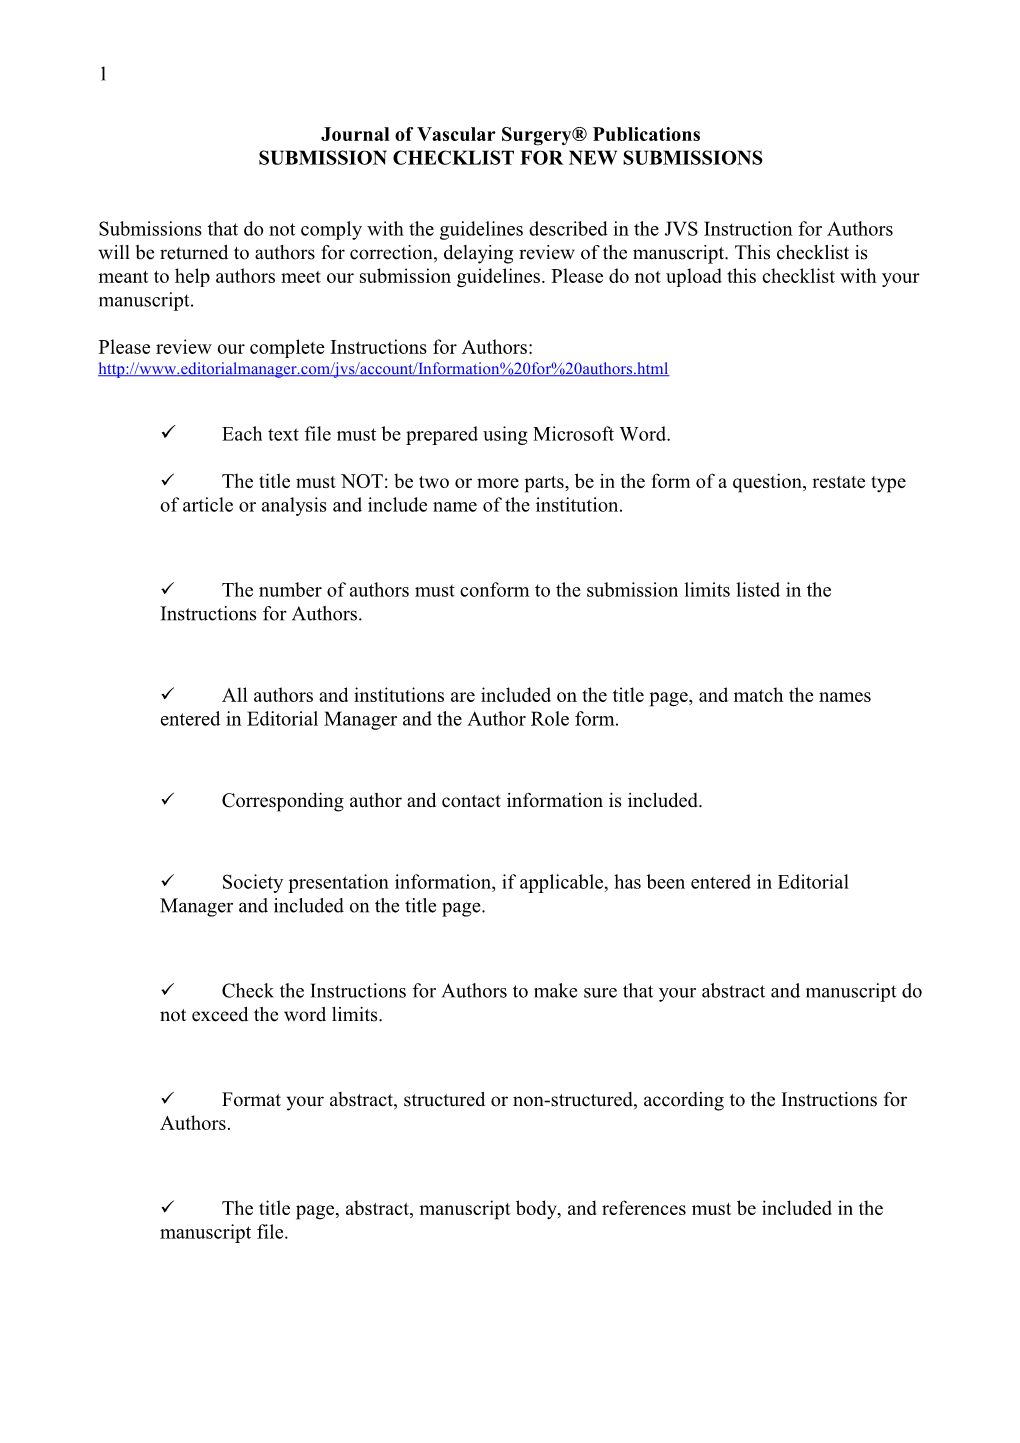 Jvs Revision Submission Checklist